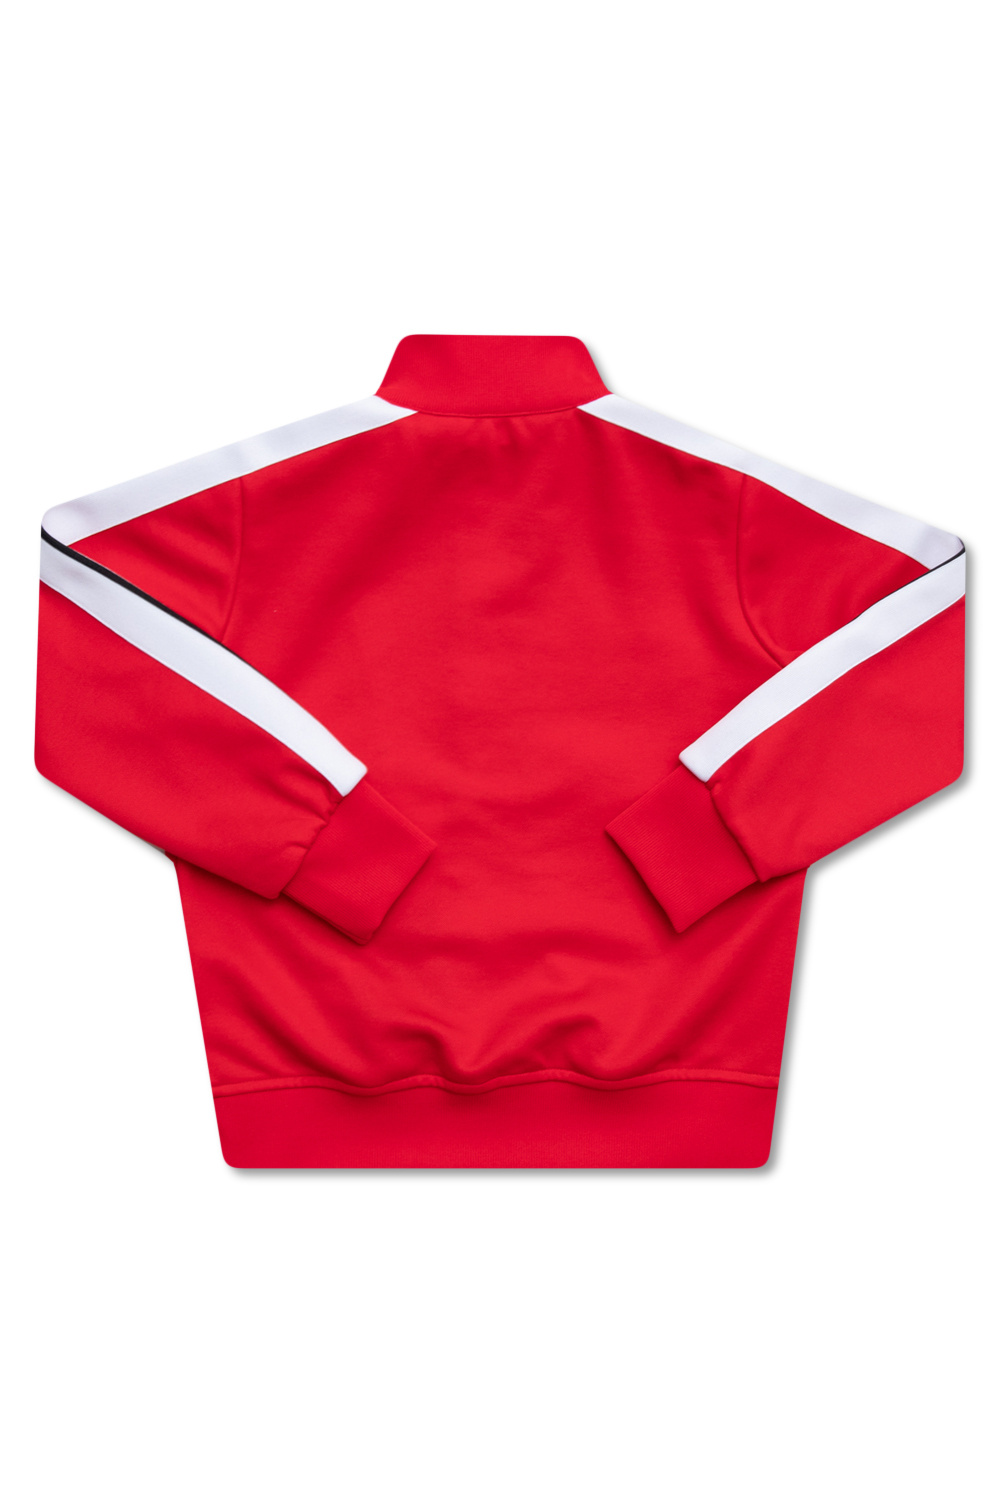 acne studios washed denim jacket item buy fila molten glitch photographic t shirt